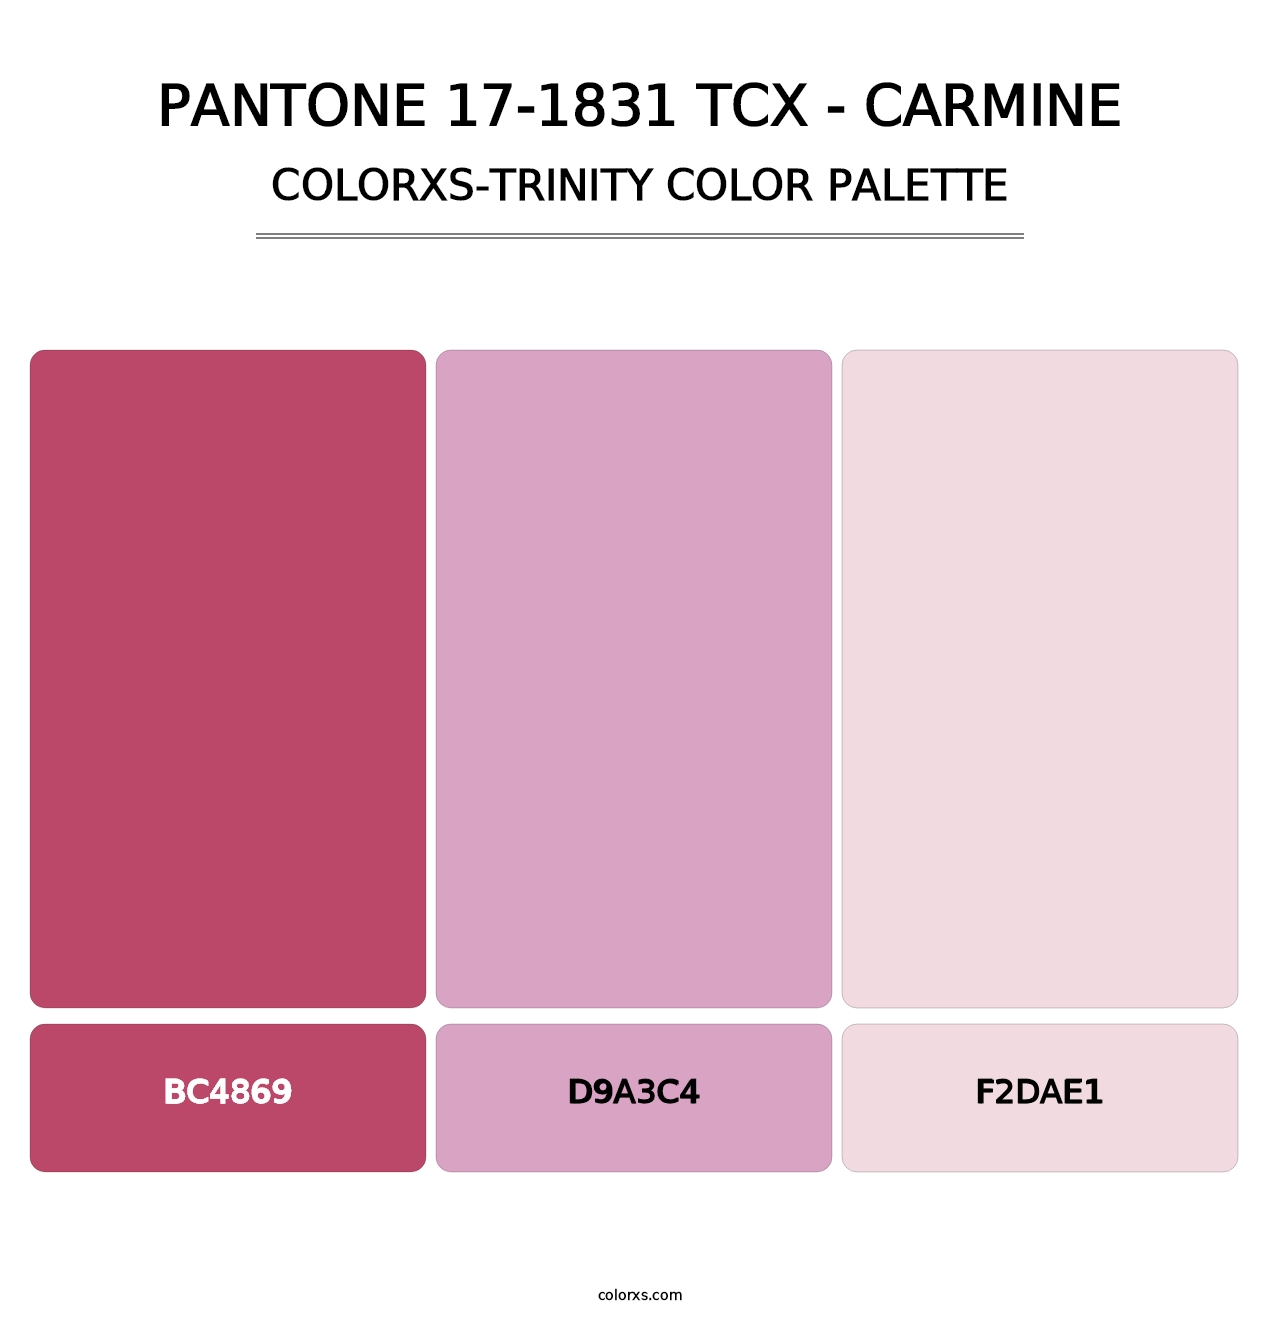 PANTONE 17-1831 TCX - Carmine - Colorxs Trinity Palette